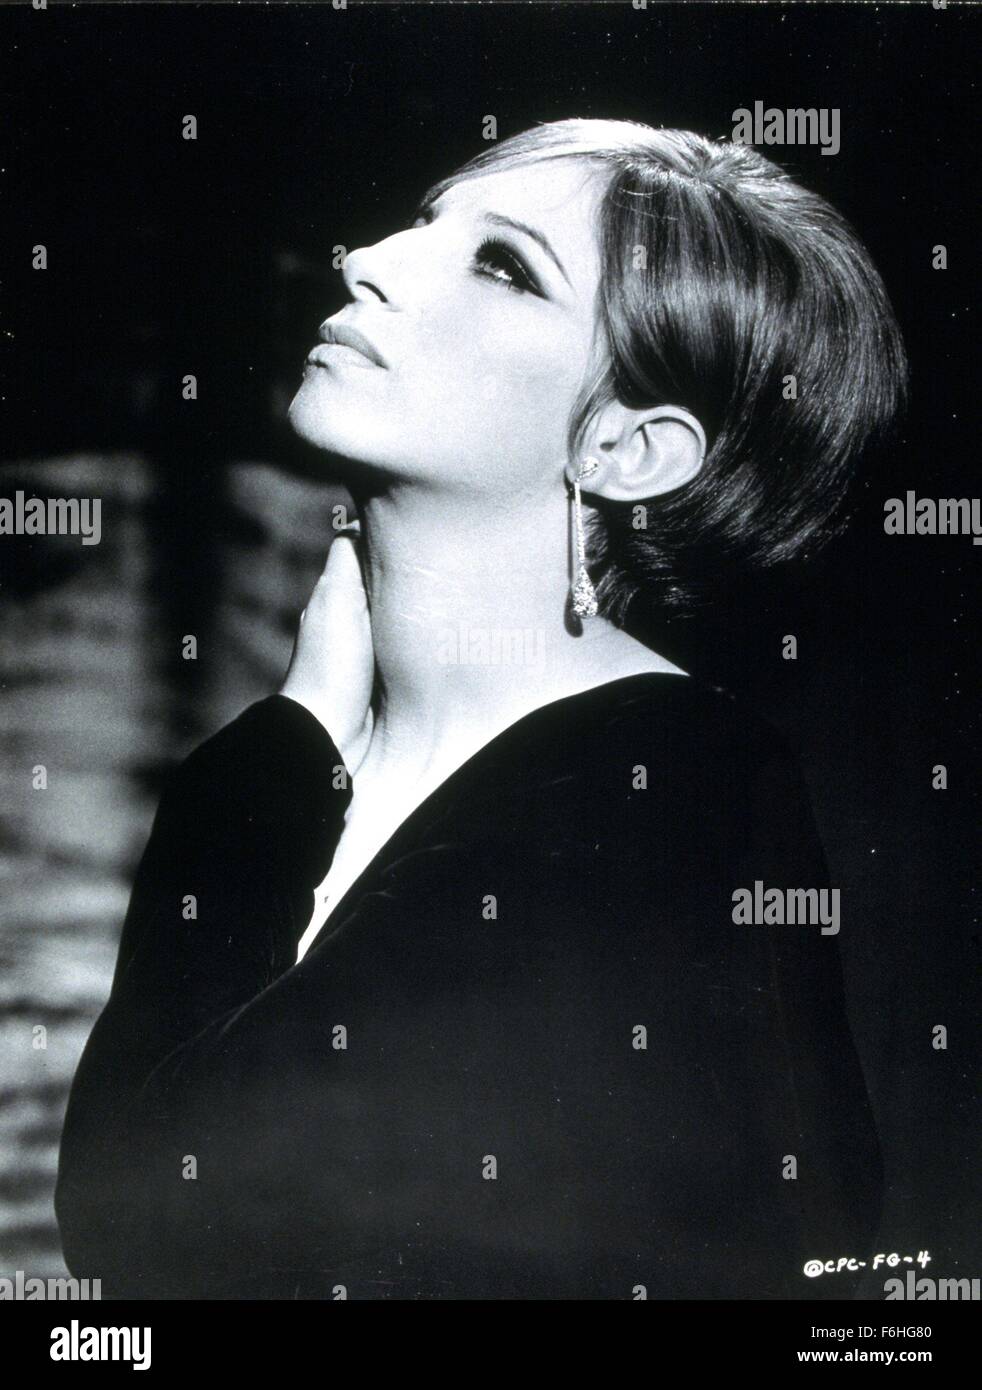 1968, Film Title: FUNNY GIRL, Director: WILLIAM WYLER, Studio: COLUMBIA, Pictured: 1968, AWARDS - ACADEMY, BEST ACTRESS, BARBRA STREISAND. (Credit Image: SNAP) Stock Photo